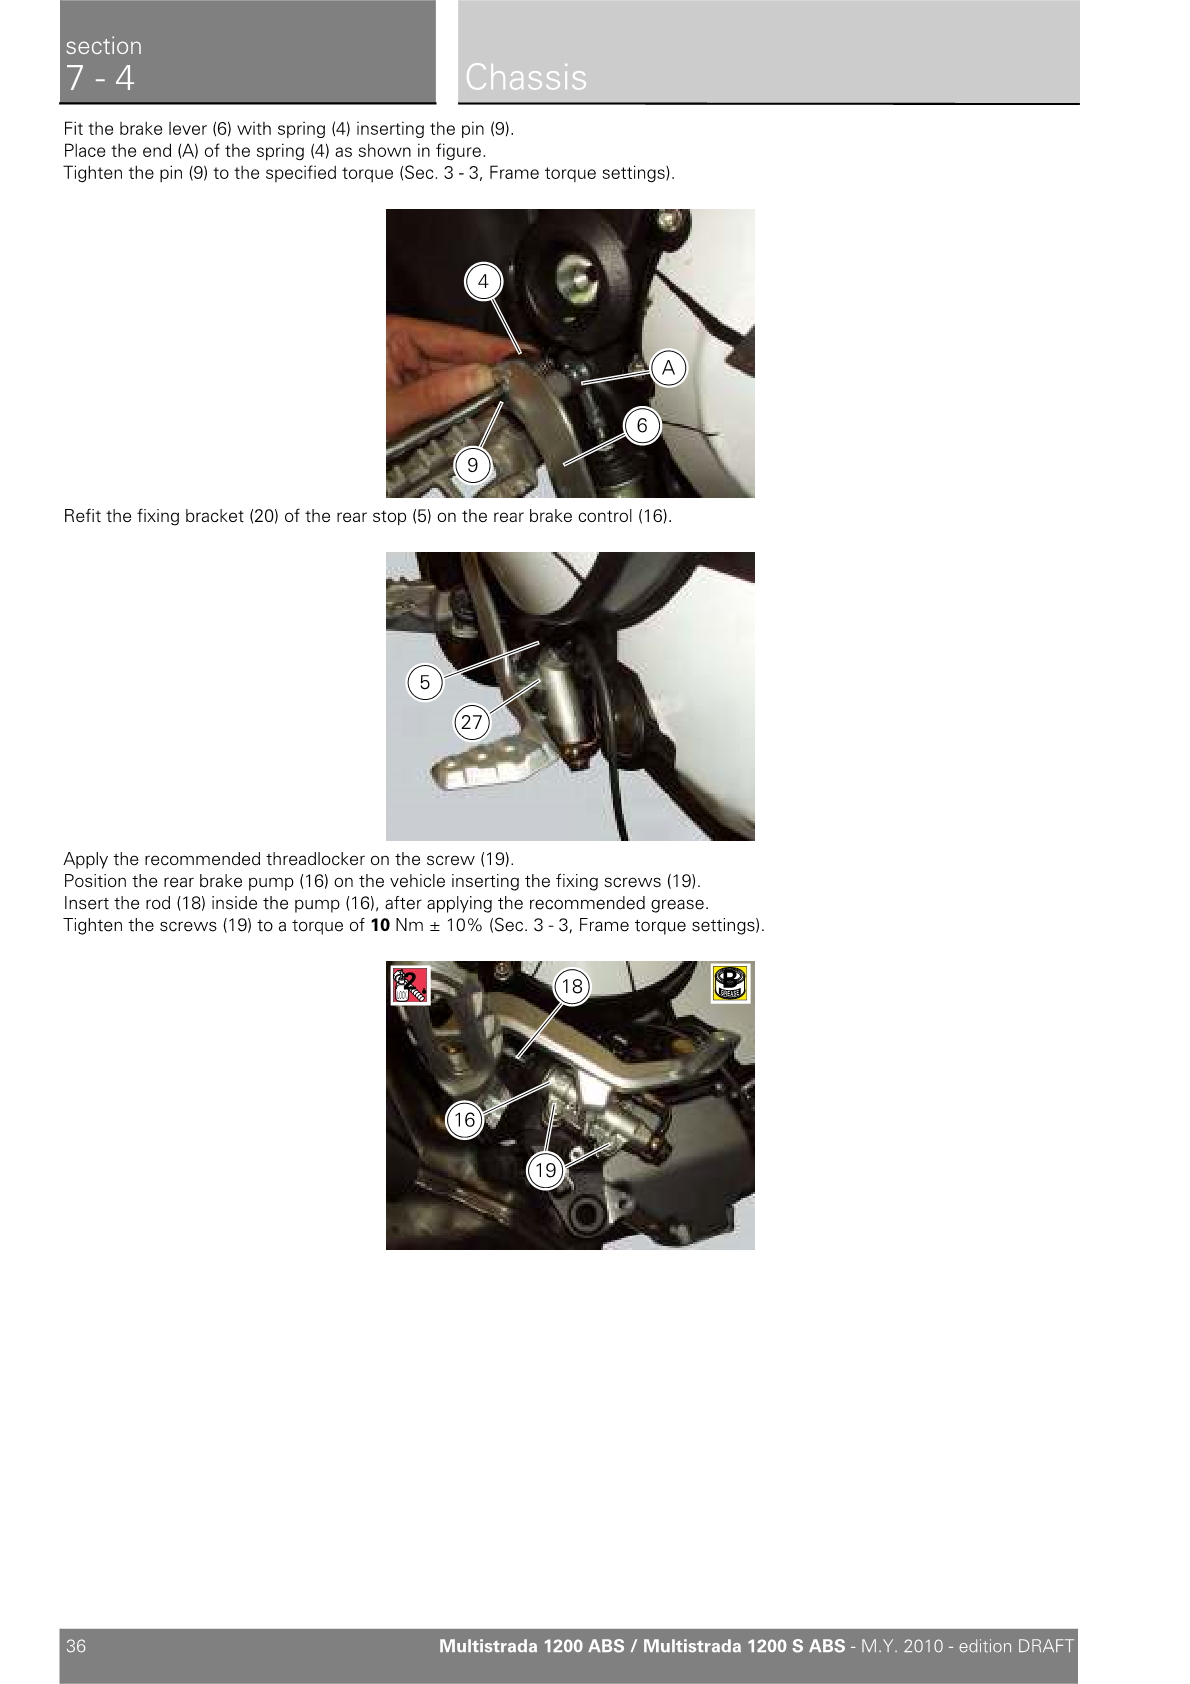 2010-2014 Ducati Multistrada MTS 1200S Manual doble